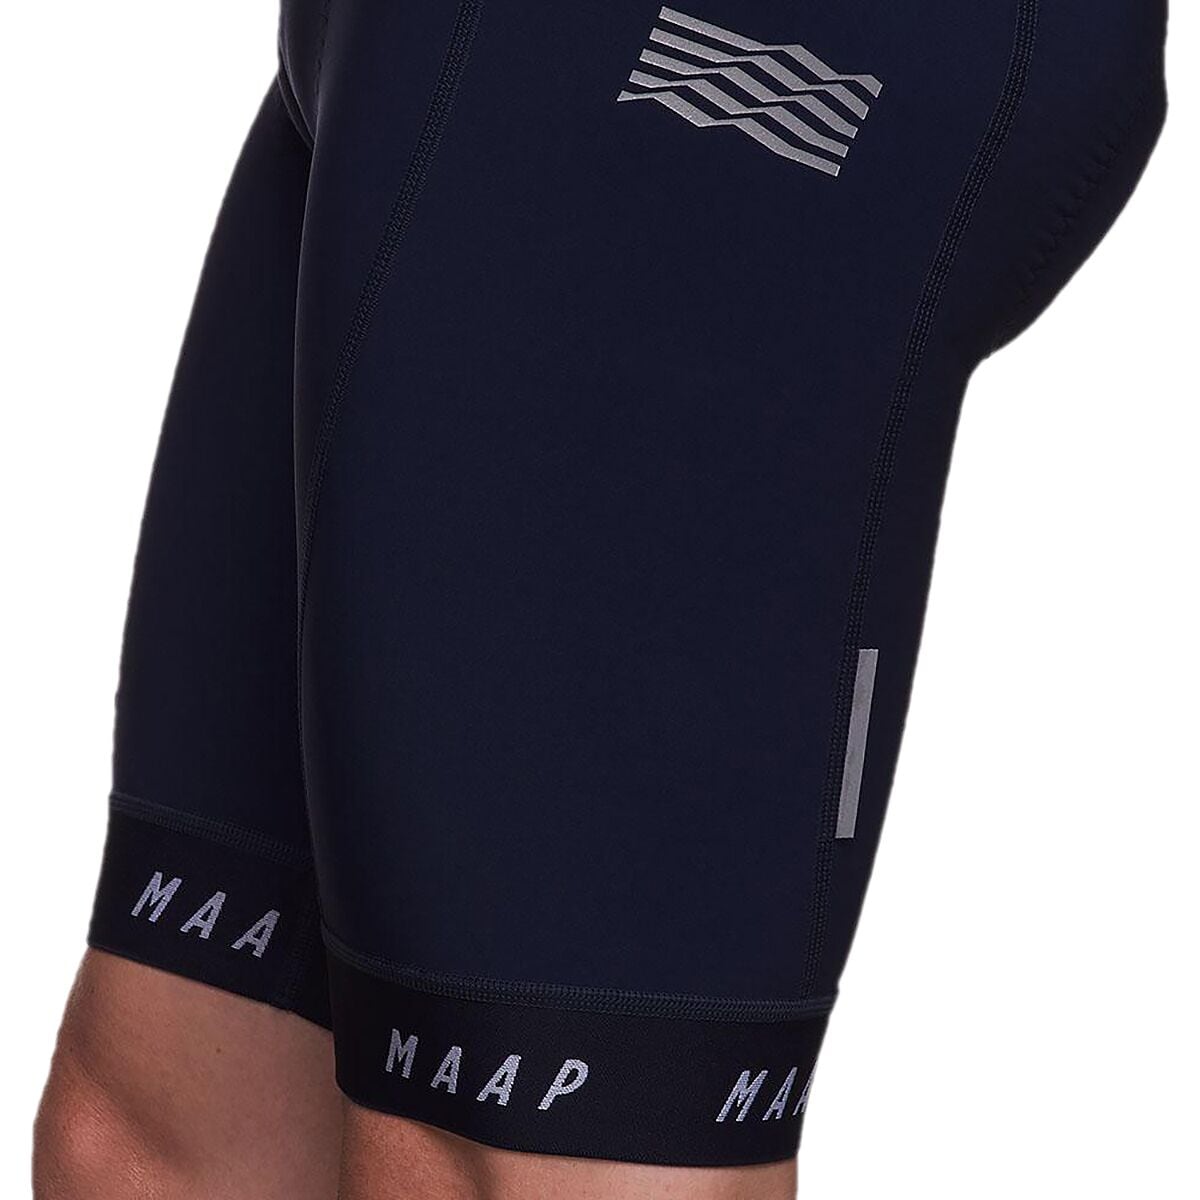 MAAP Pro Bib Shorts- Men's - Men's - Bike